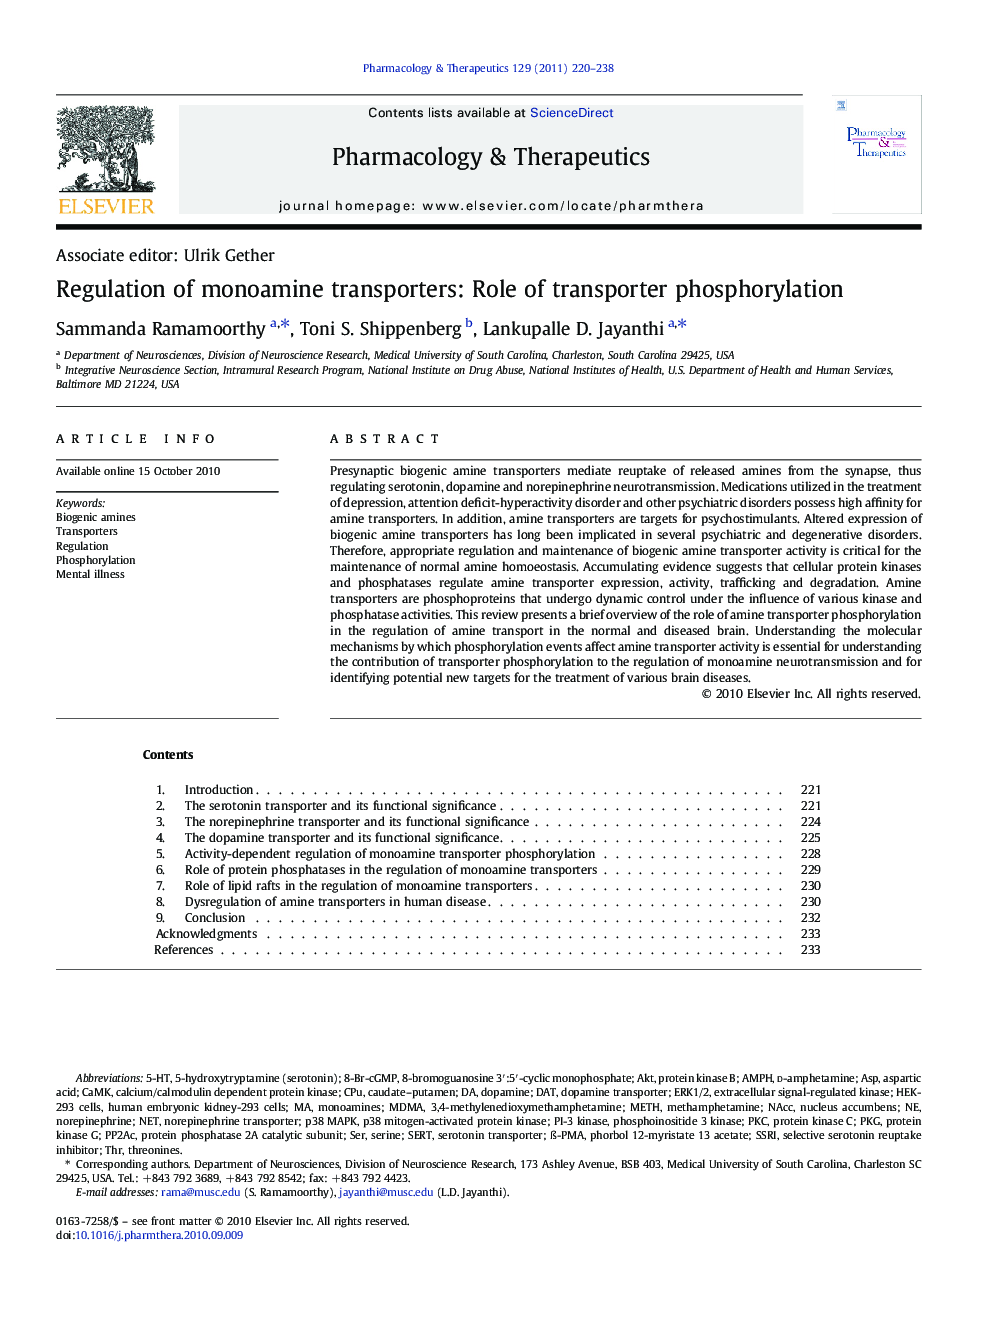 Regulation of monoamine transporters: Role of transporter phosphorylation